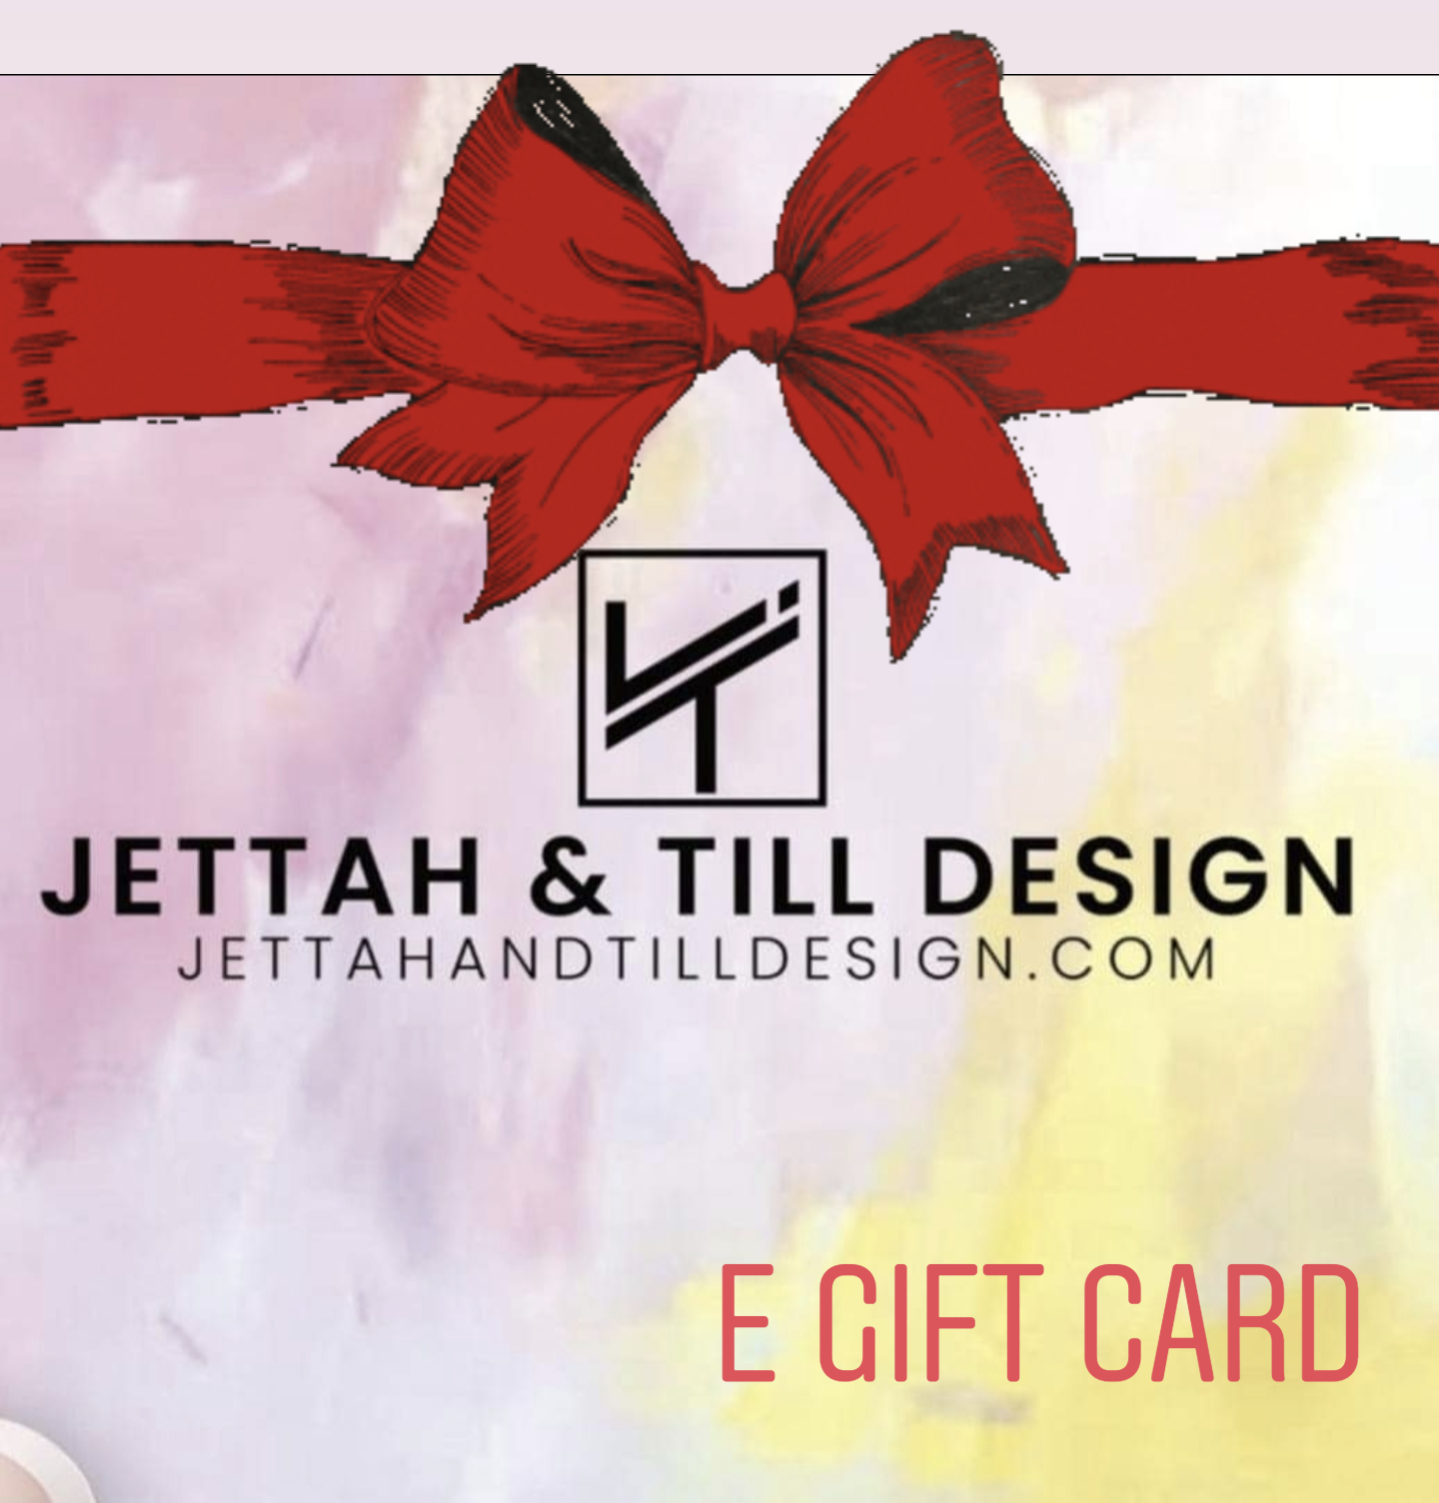 Jettah & Till Design Digital Gift Card